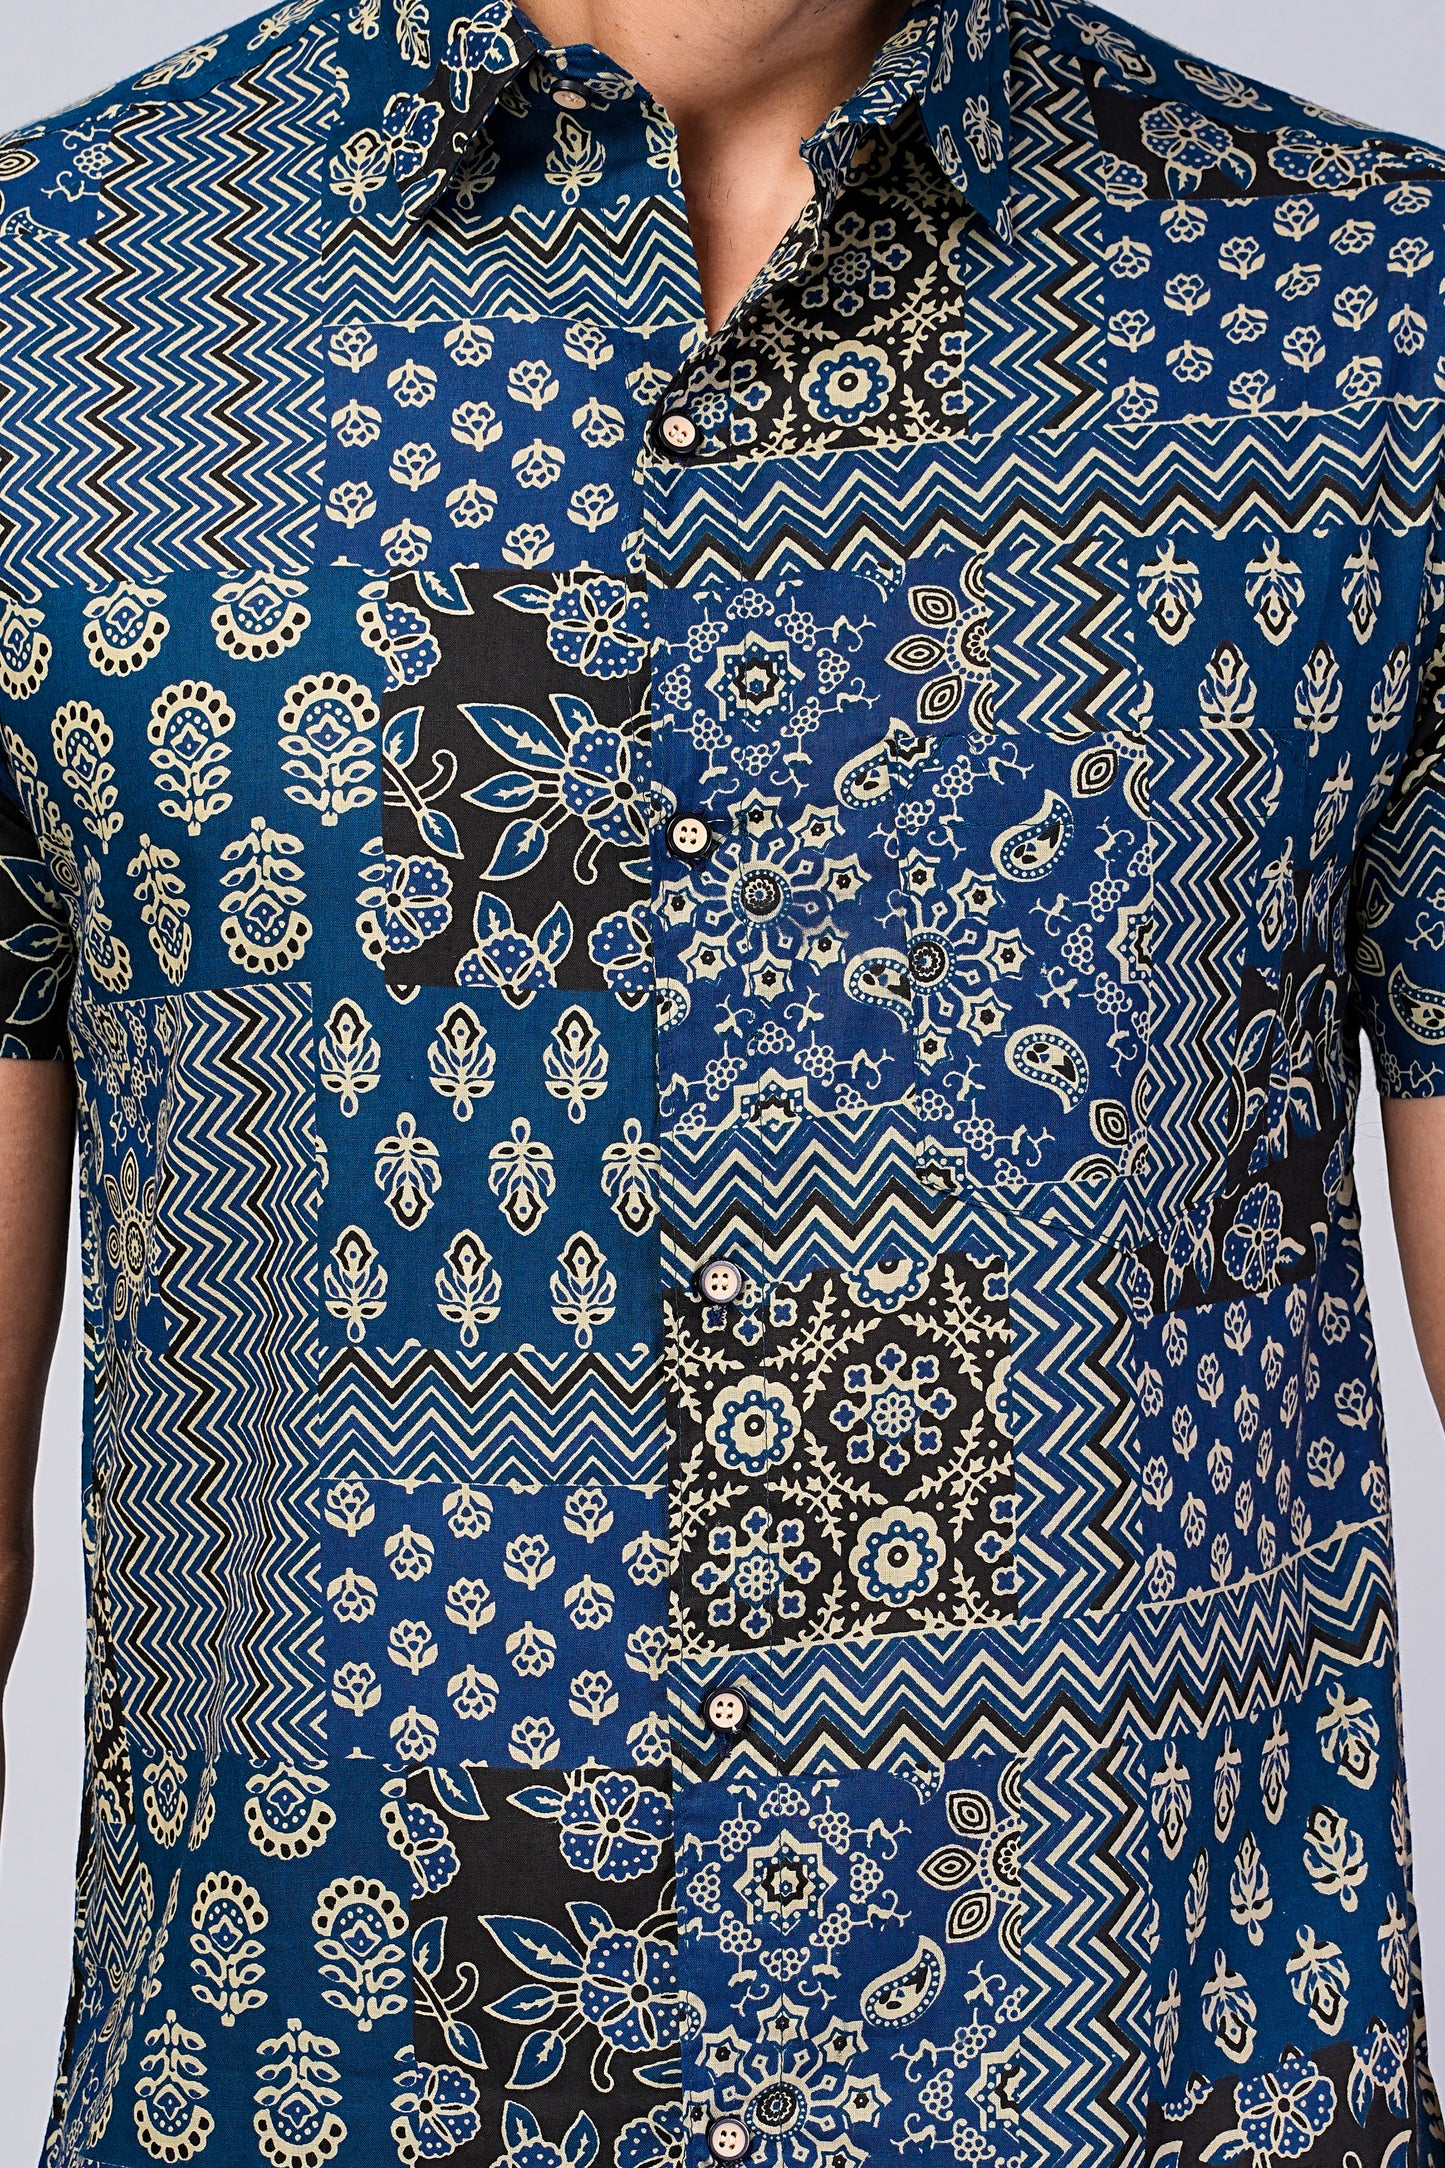 Men's Patch Work Indigo Printed Half-Sleeves shirts